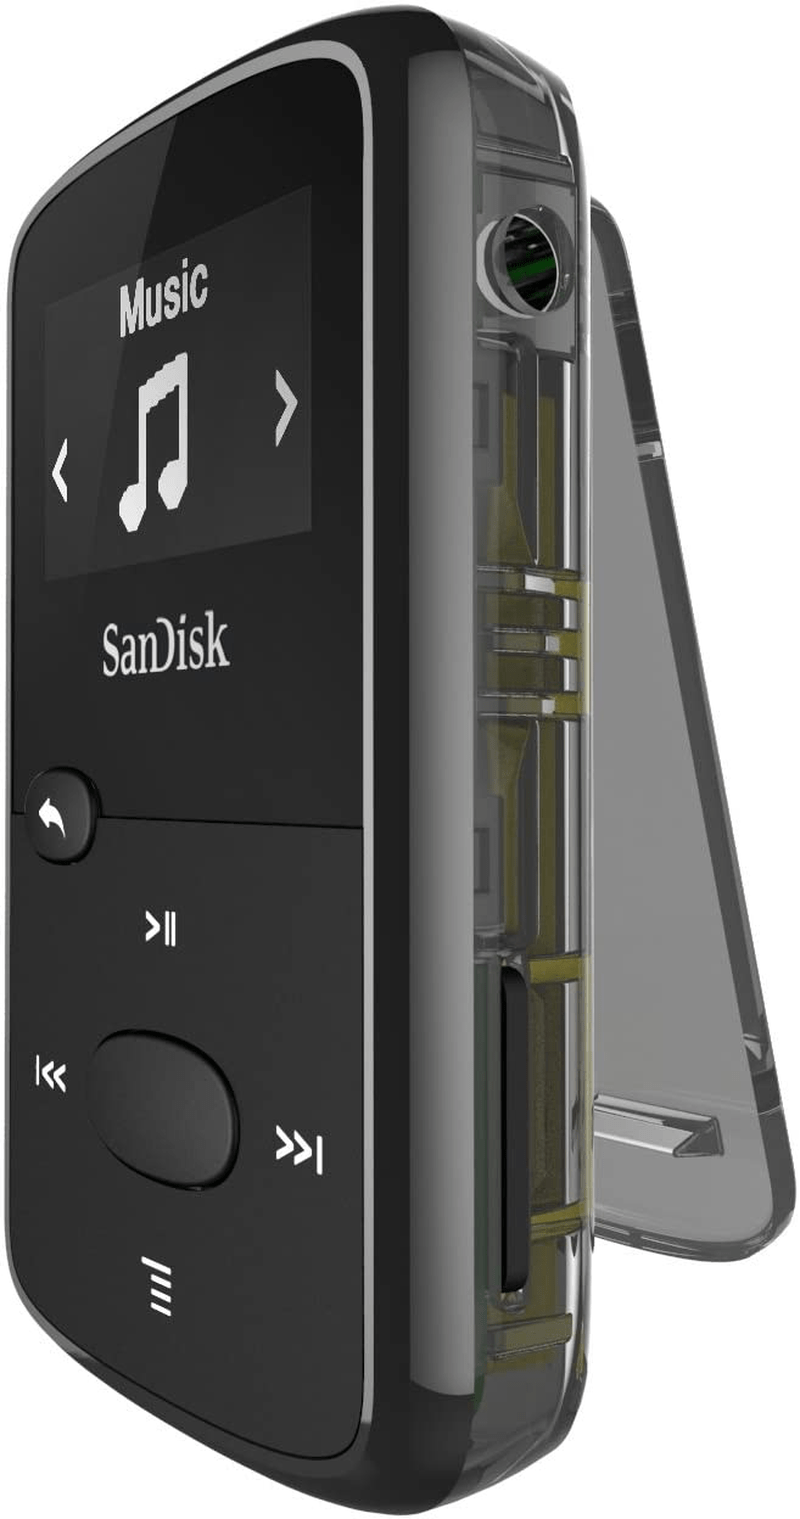 SanDisk 8GB Clip Jam MP3 Player, Black - microSD card slot and FM Radio - SDMX26-008G-G46K Electronics > Audio > Audio Players & Recorders > MP3 Players SanDisk   